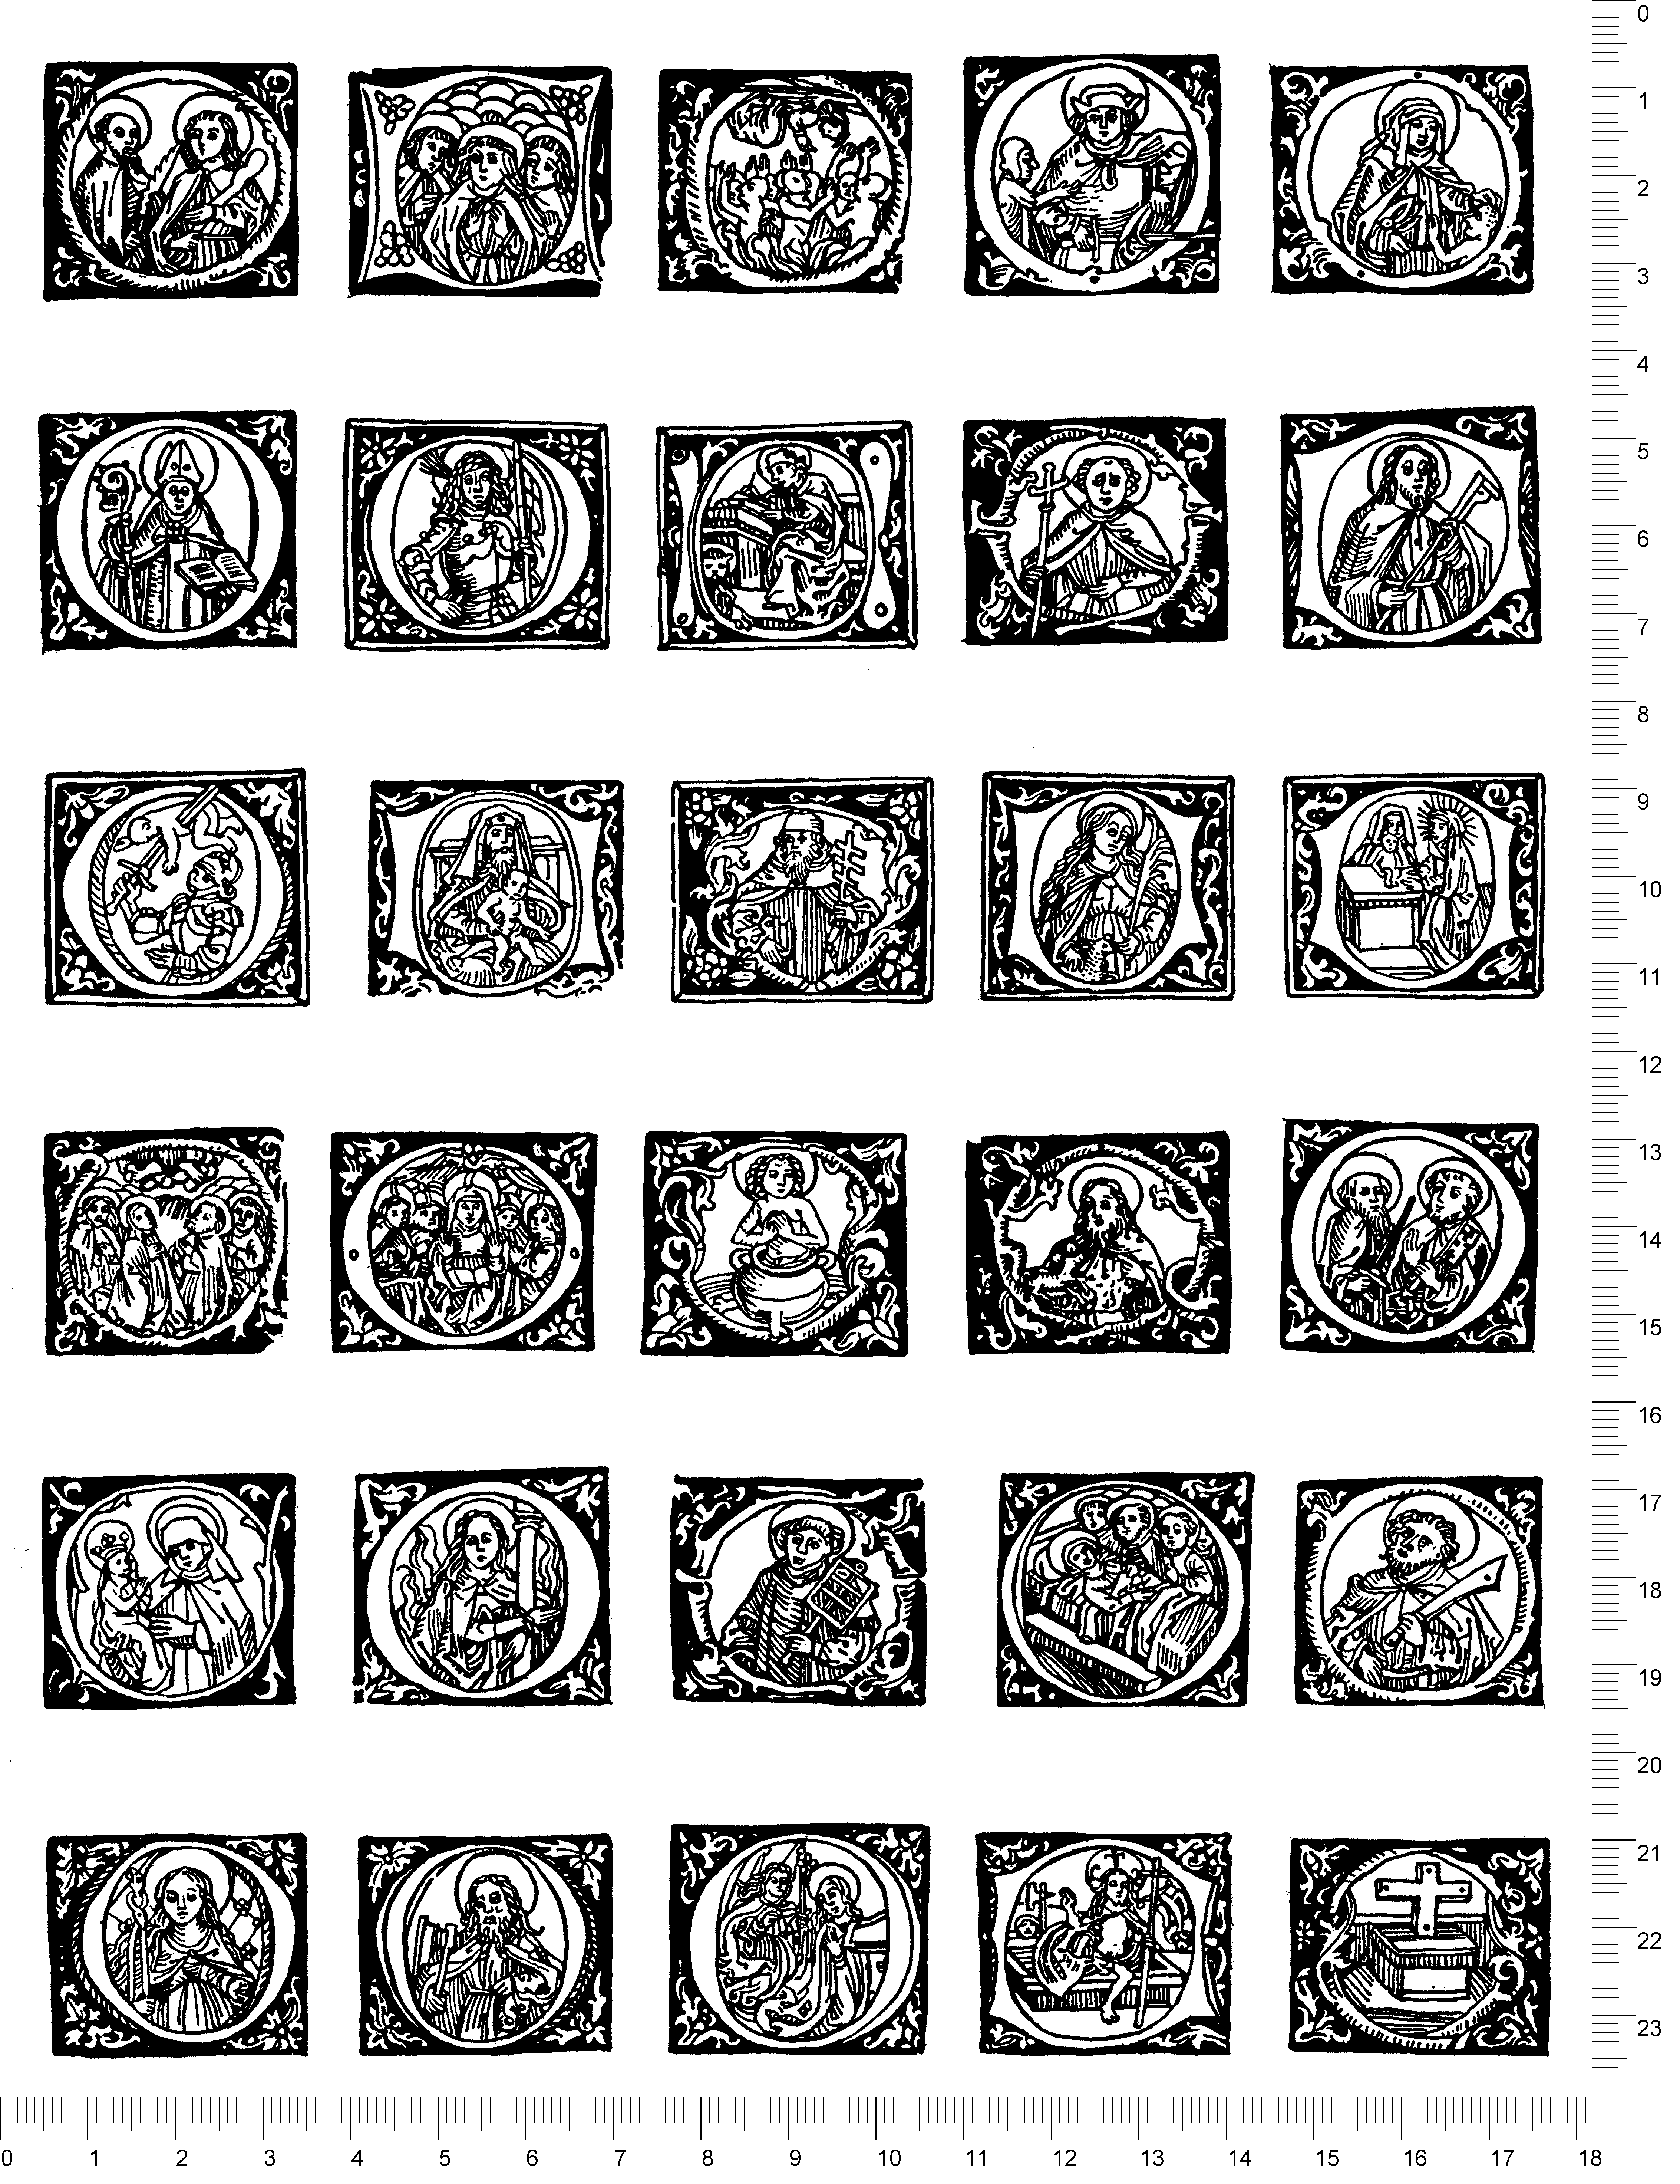 Abbildung der GfT-Tafeln vonGfT1911.1